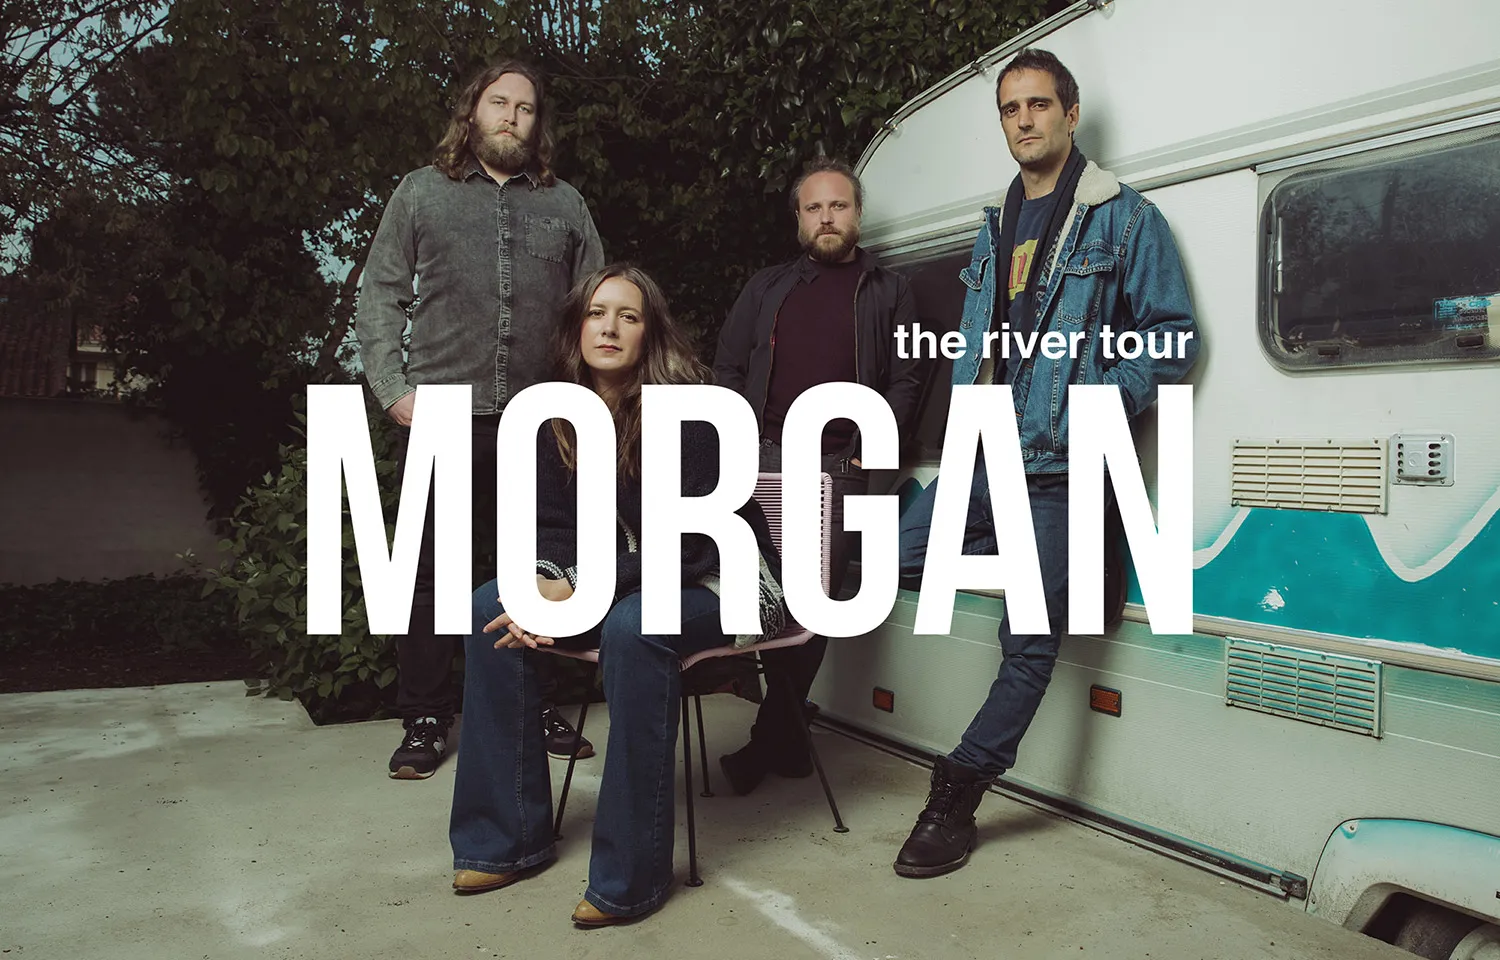 Morgan The River Tour imagen promocional